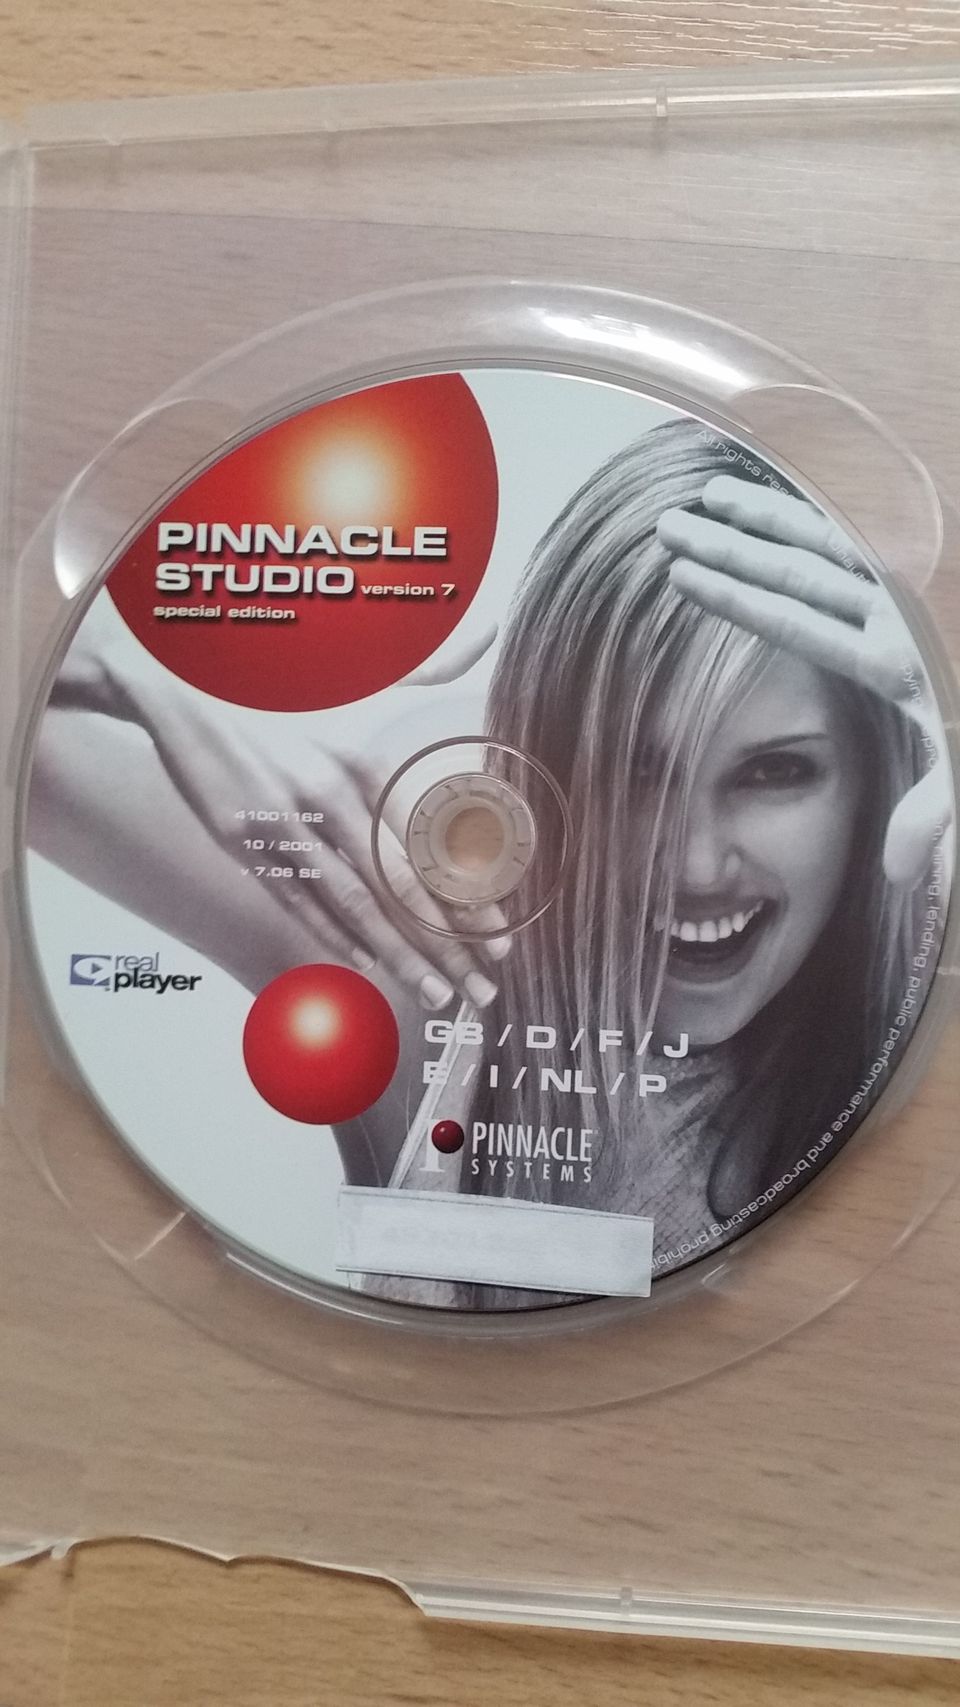 Pinnacle Studio v.7 special edition